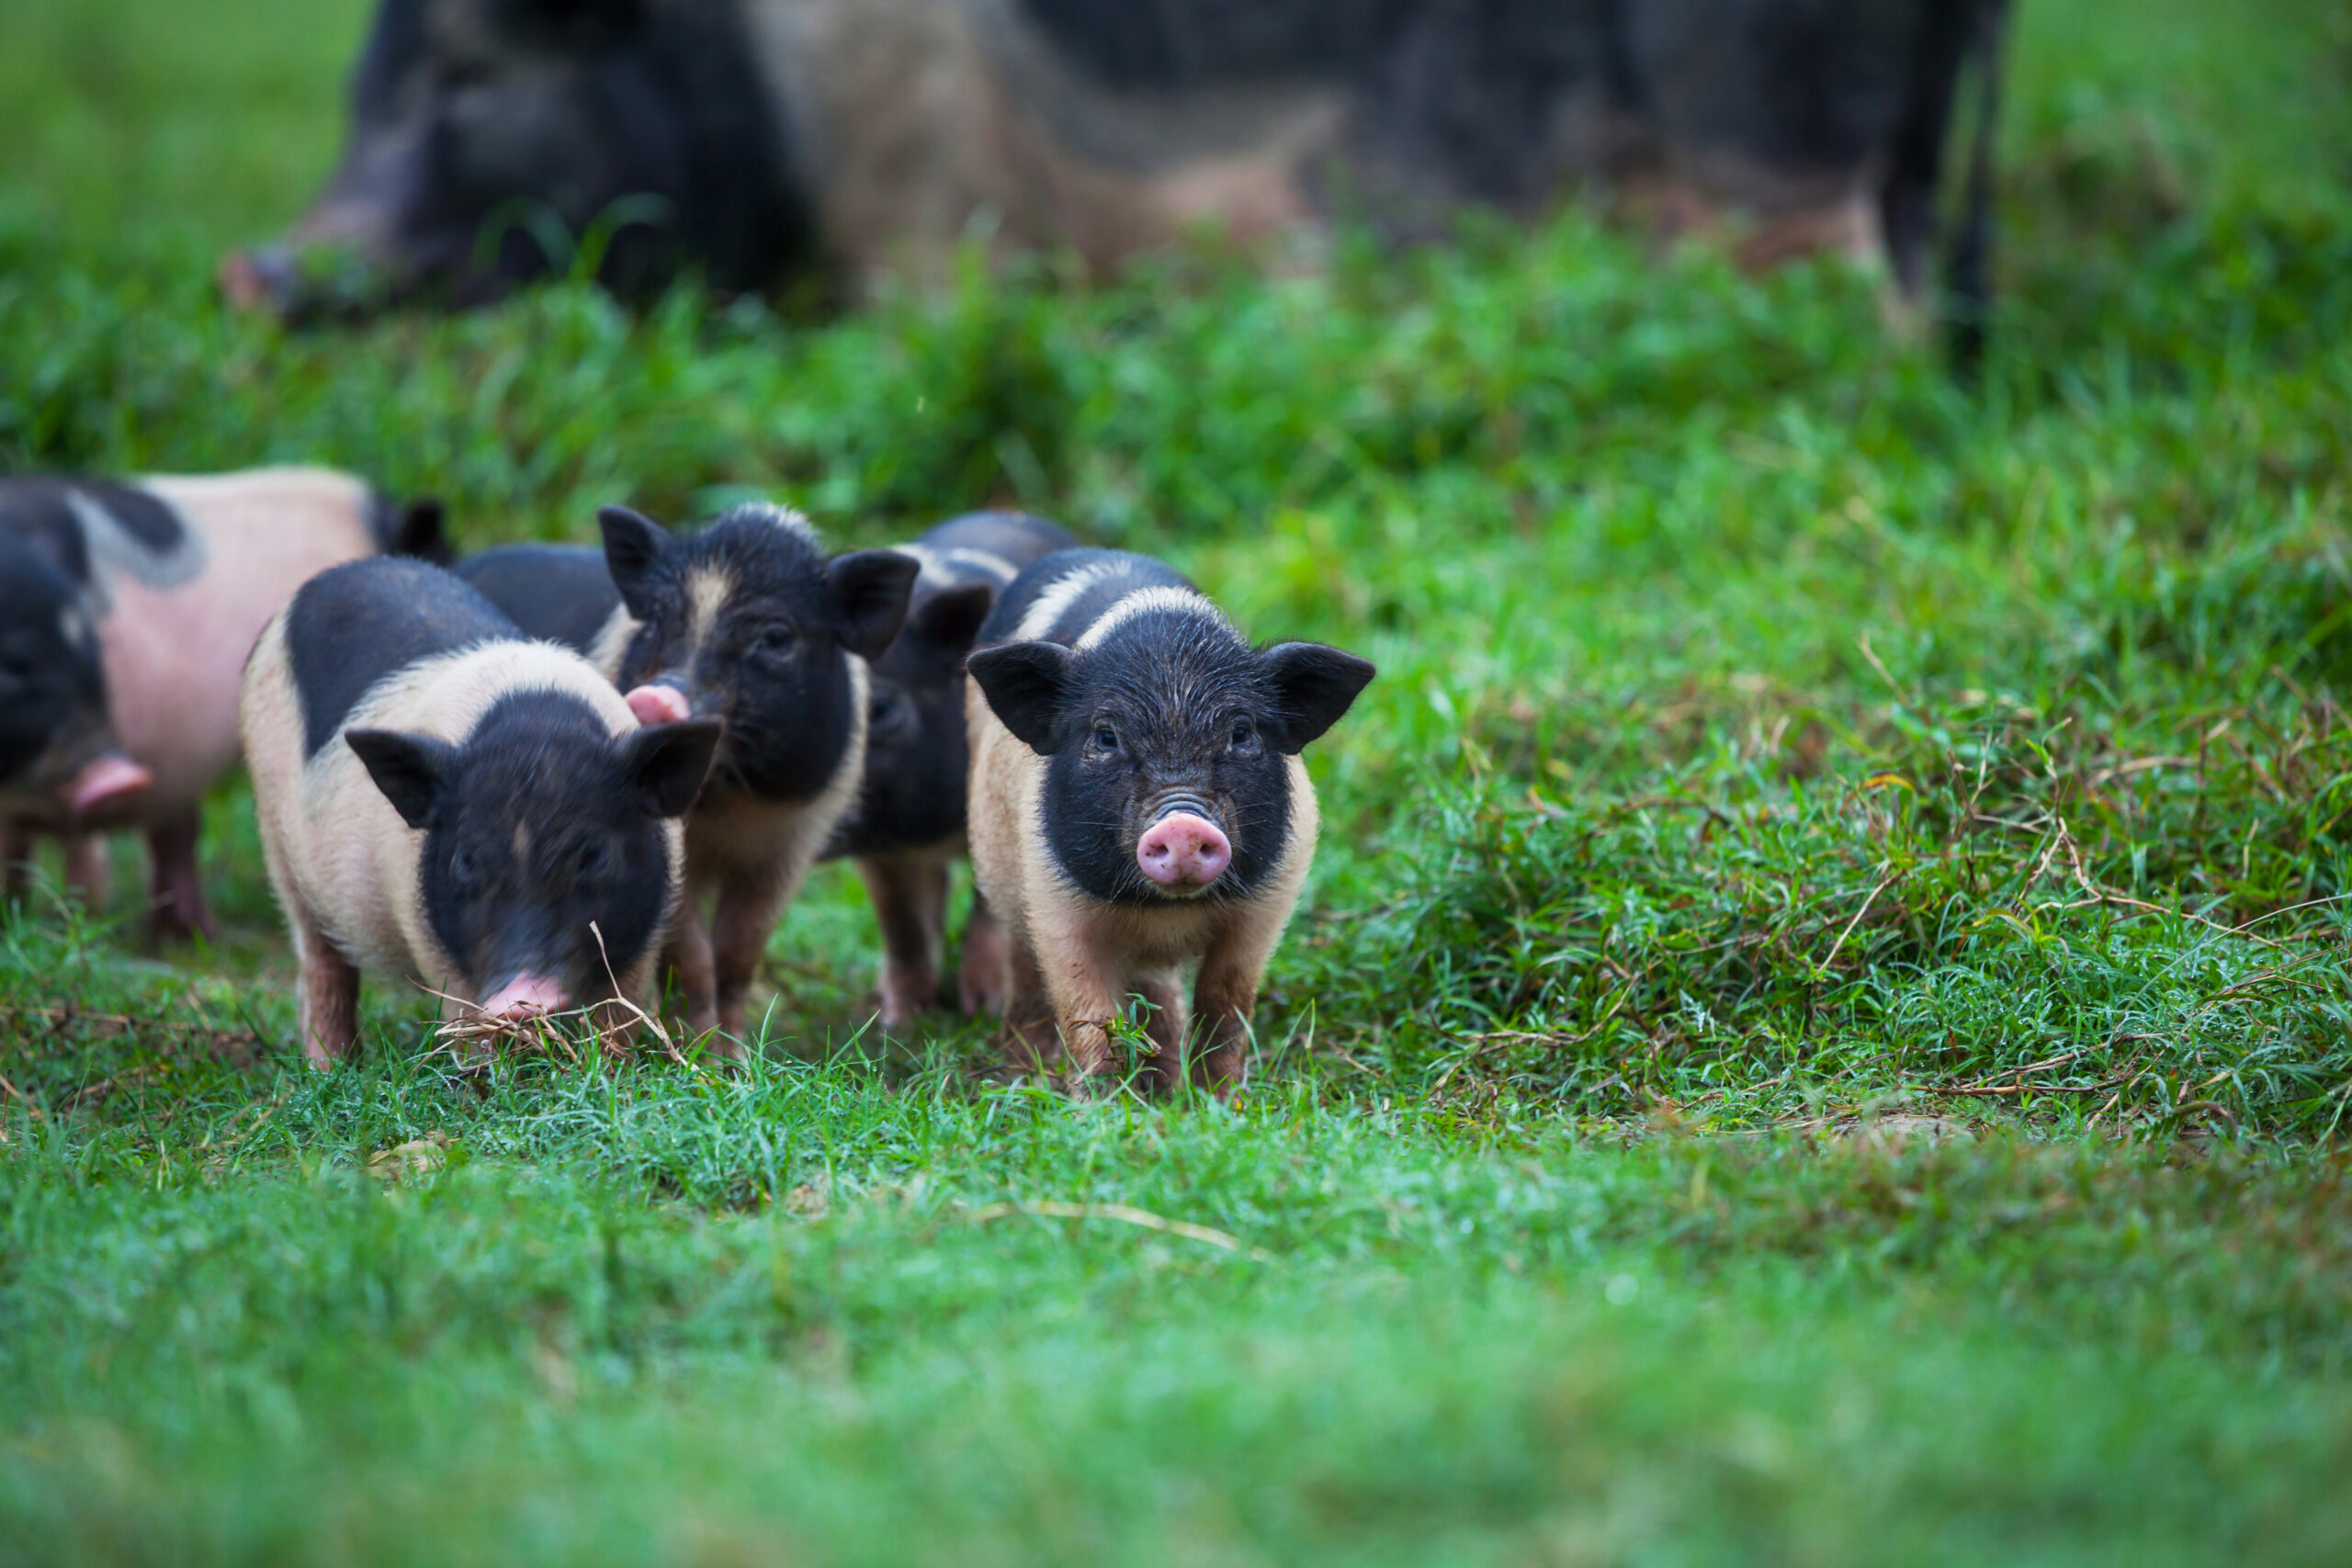 Schweine, Image by kamchatka on Freepik